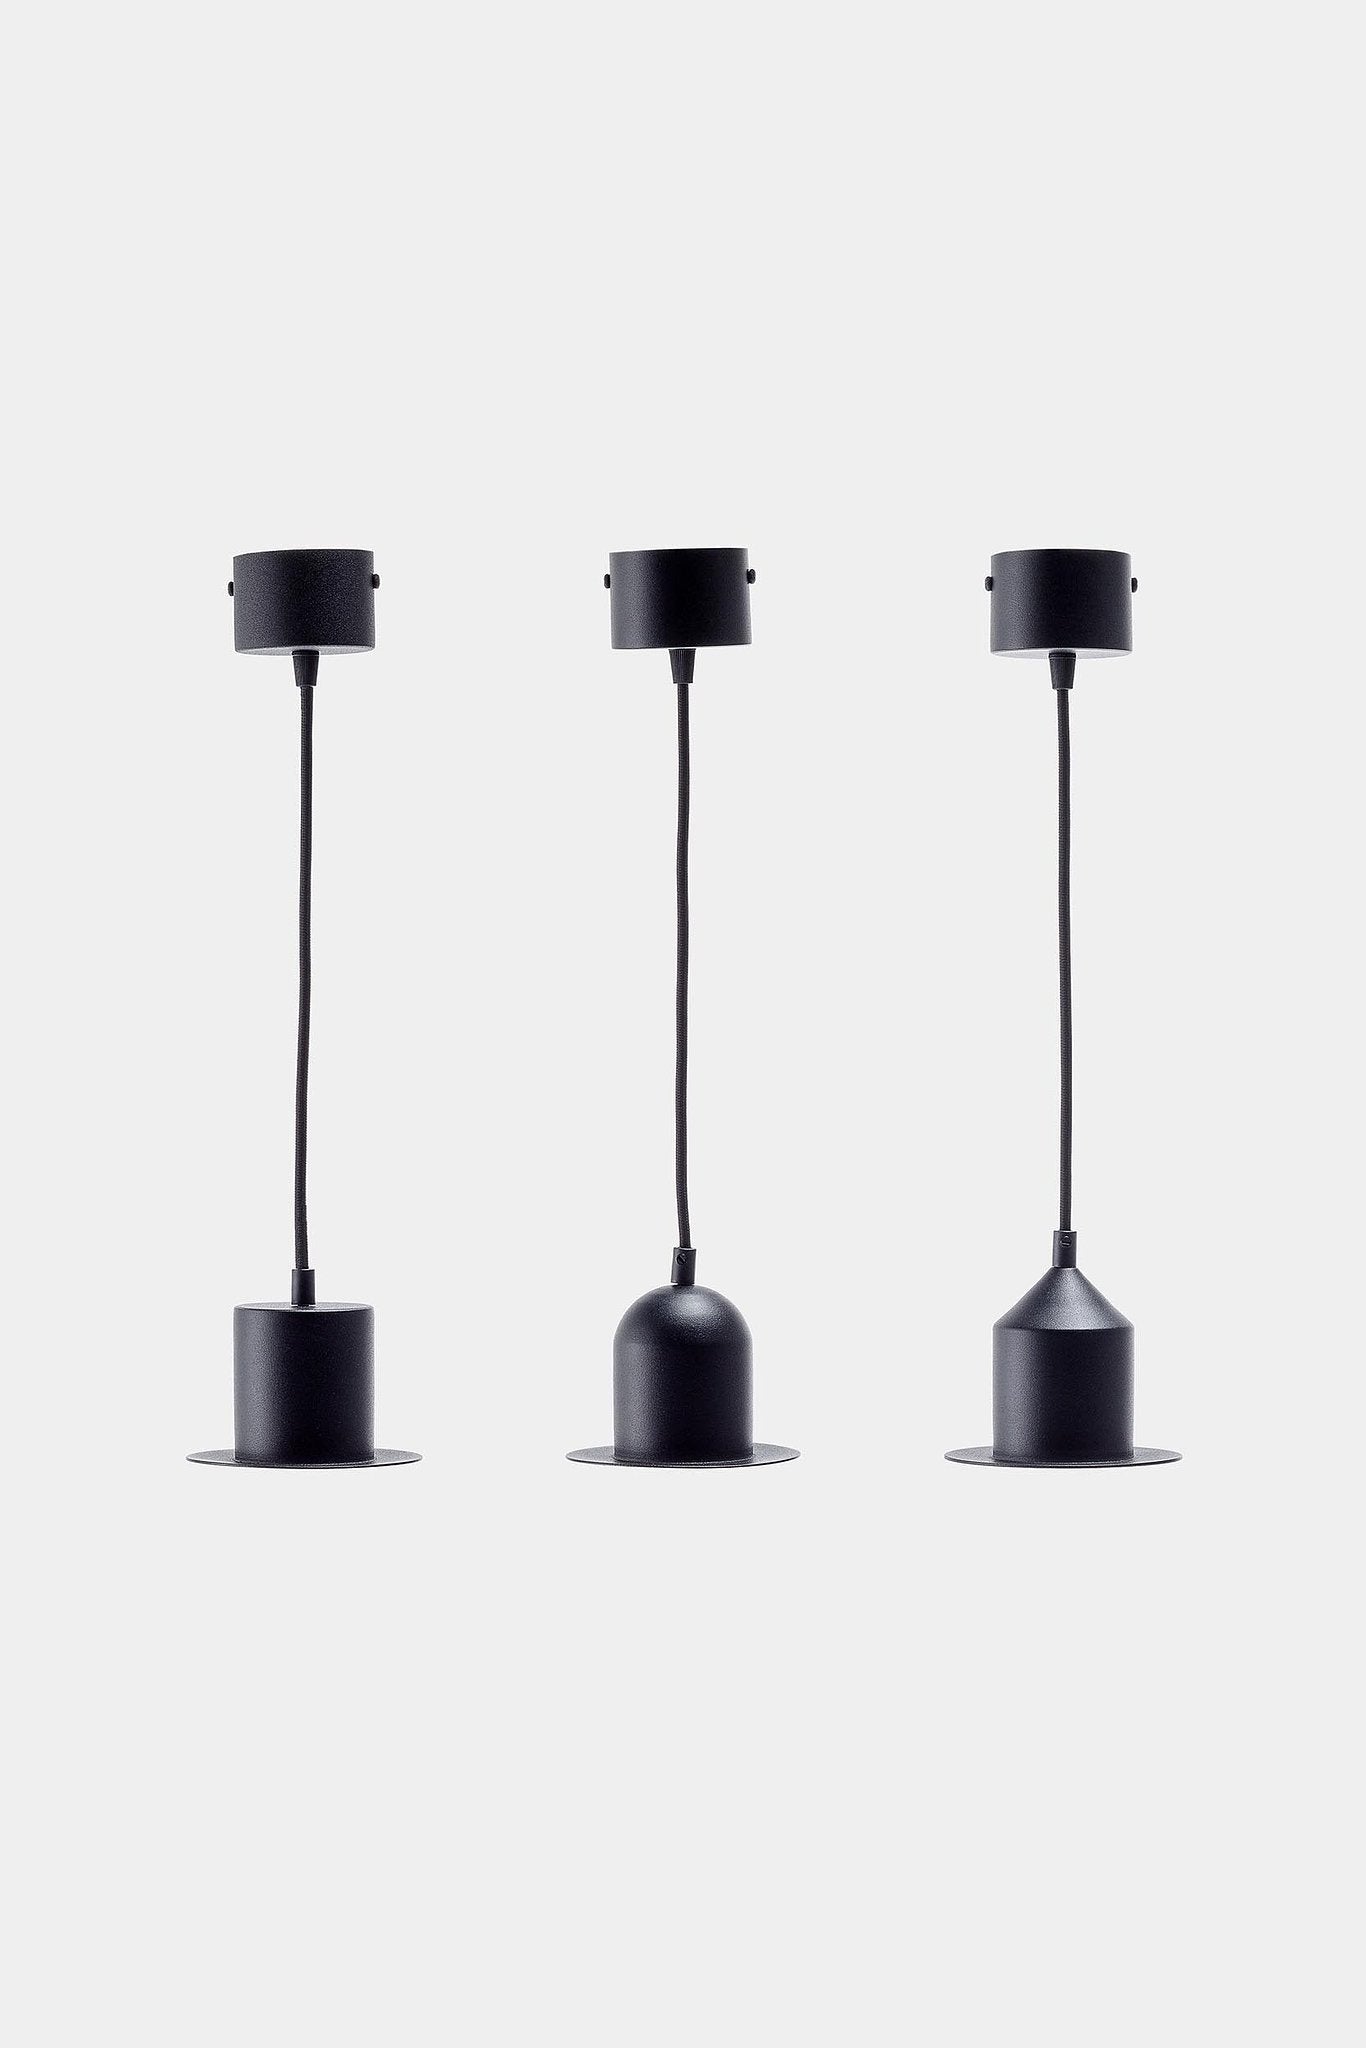 EMKO HAT Pendant Lamp 1x Cylinder